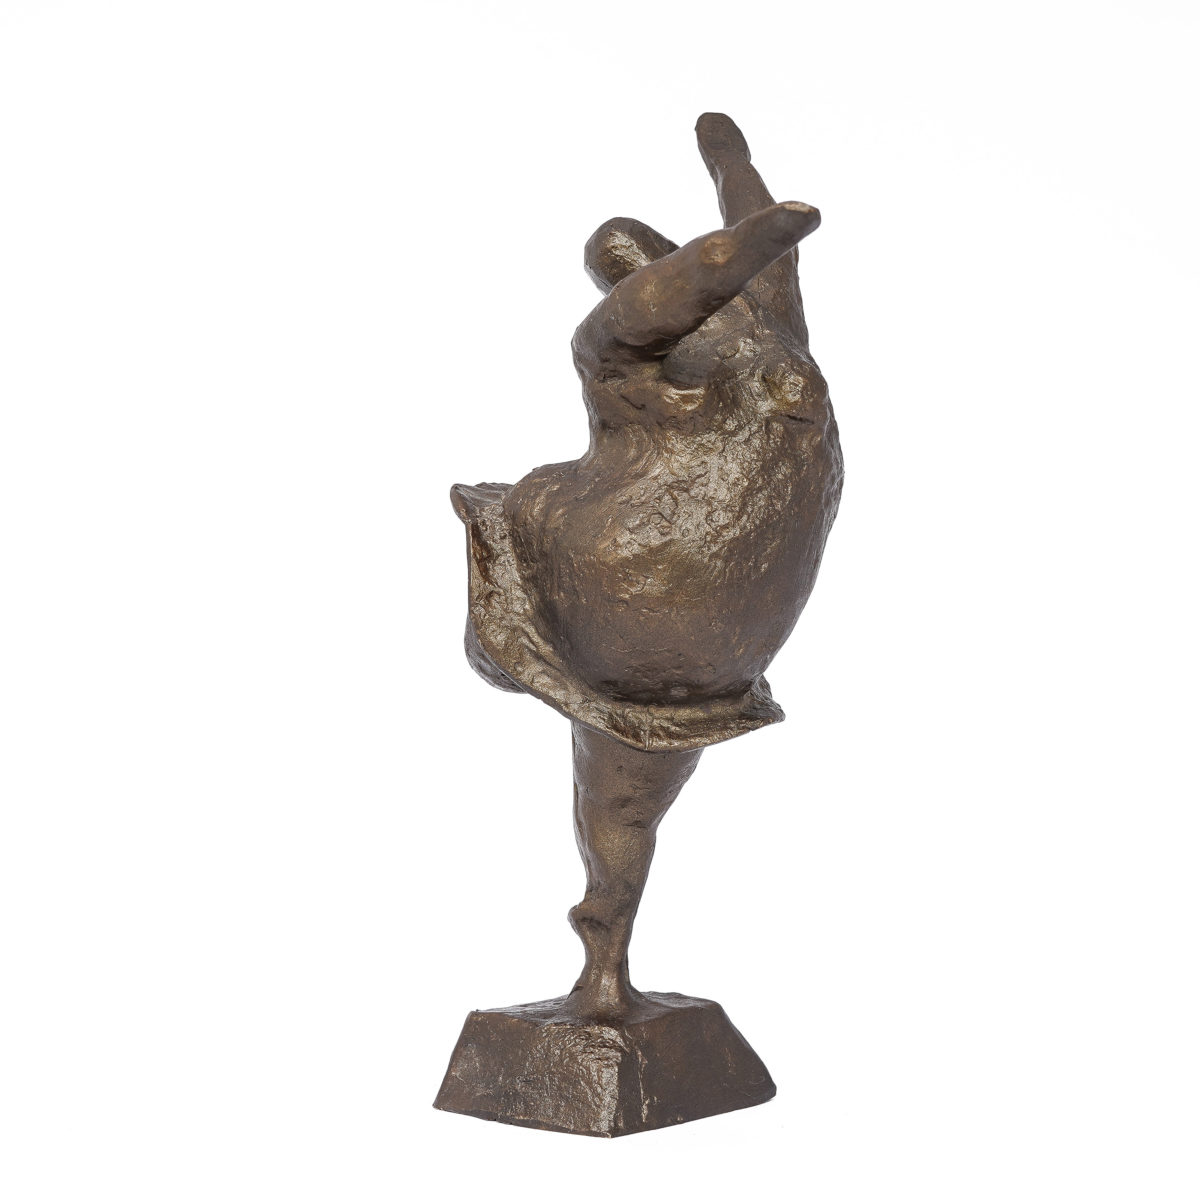 Standing bronze figurine for shelve decor